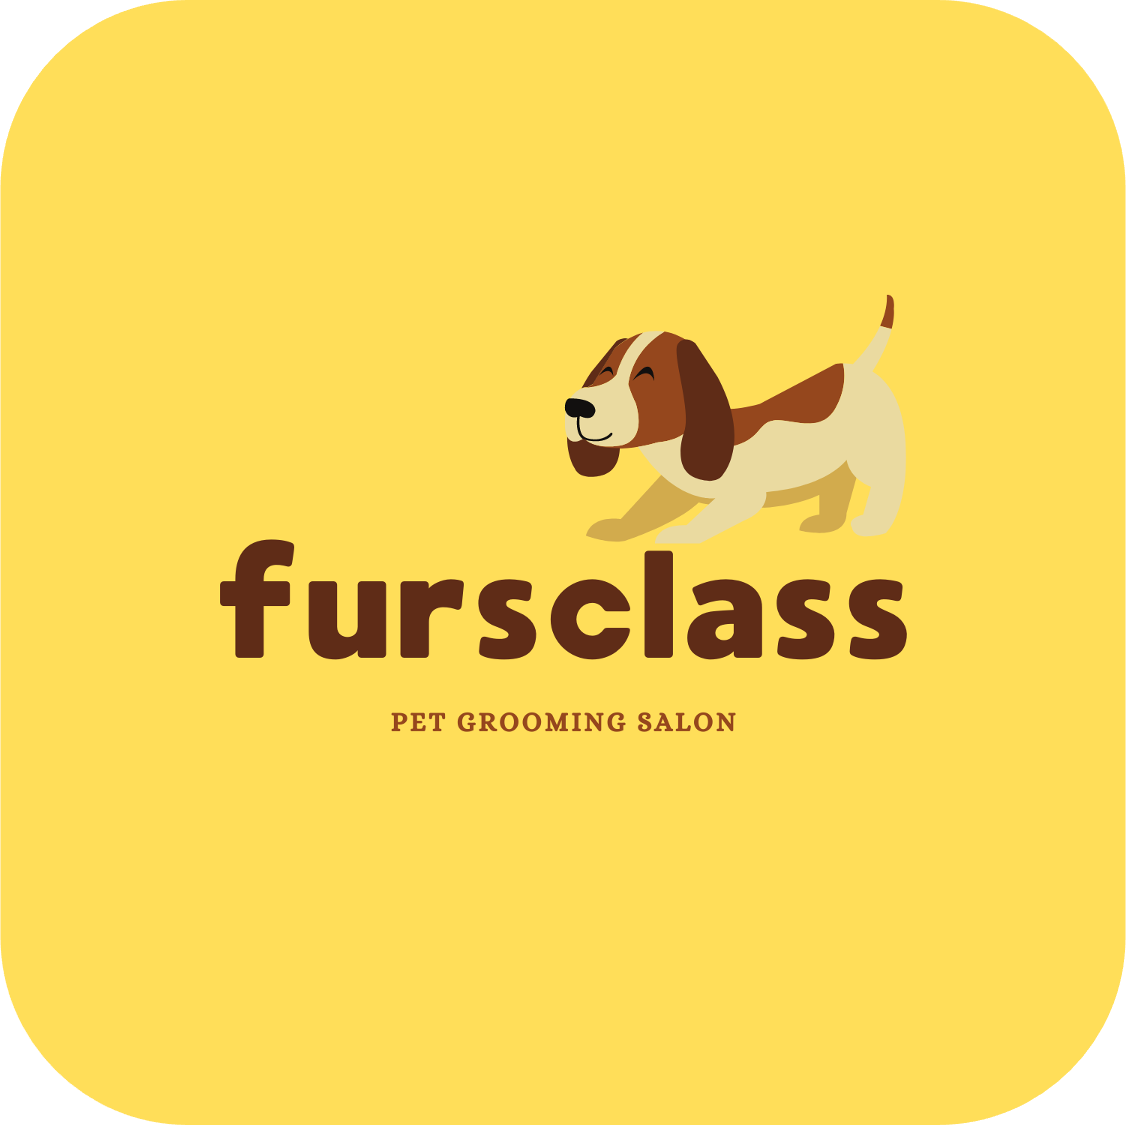 Fursclass Pet Grooming Salon